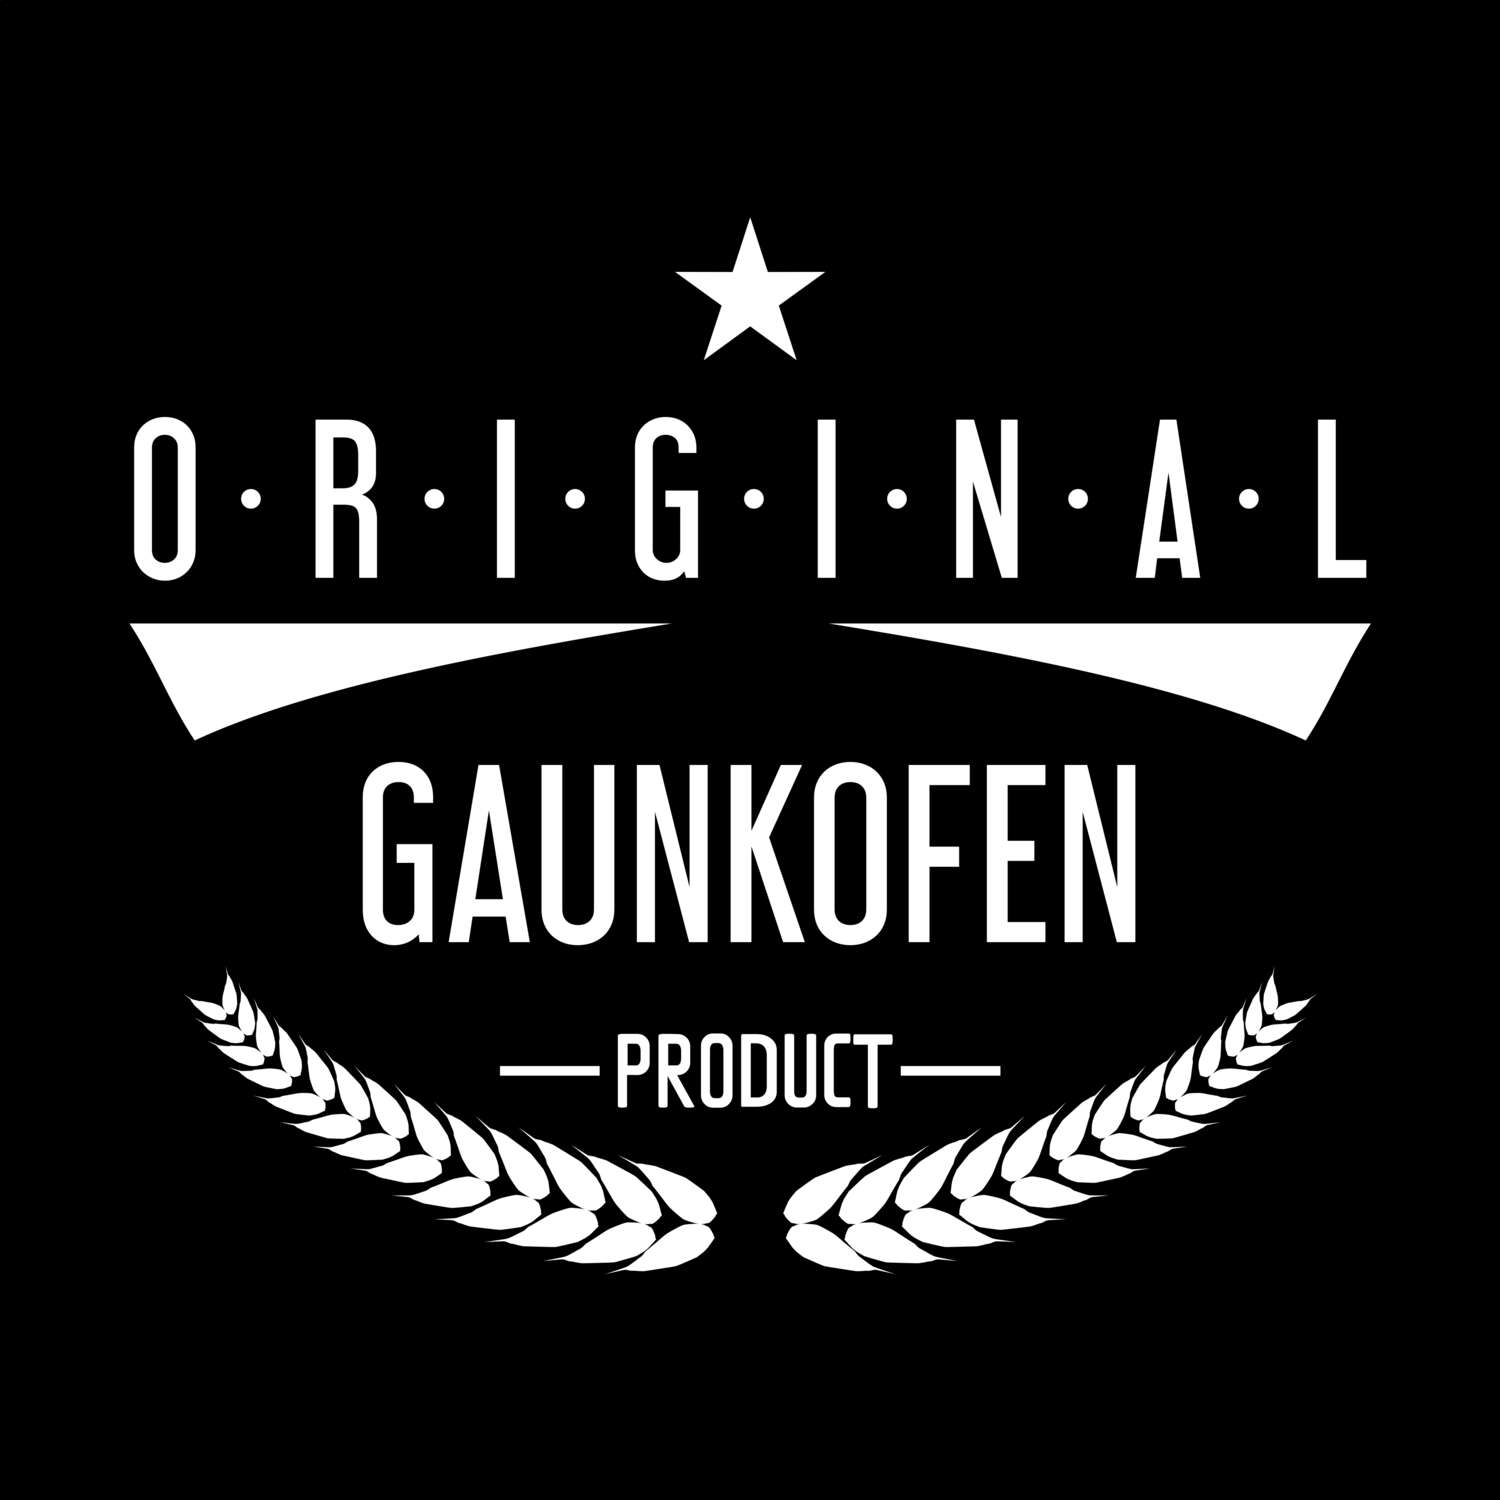 Gaunkofen T-Shirt »Original Product«